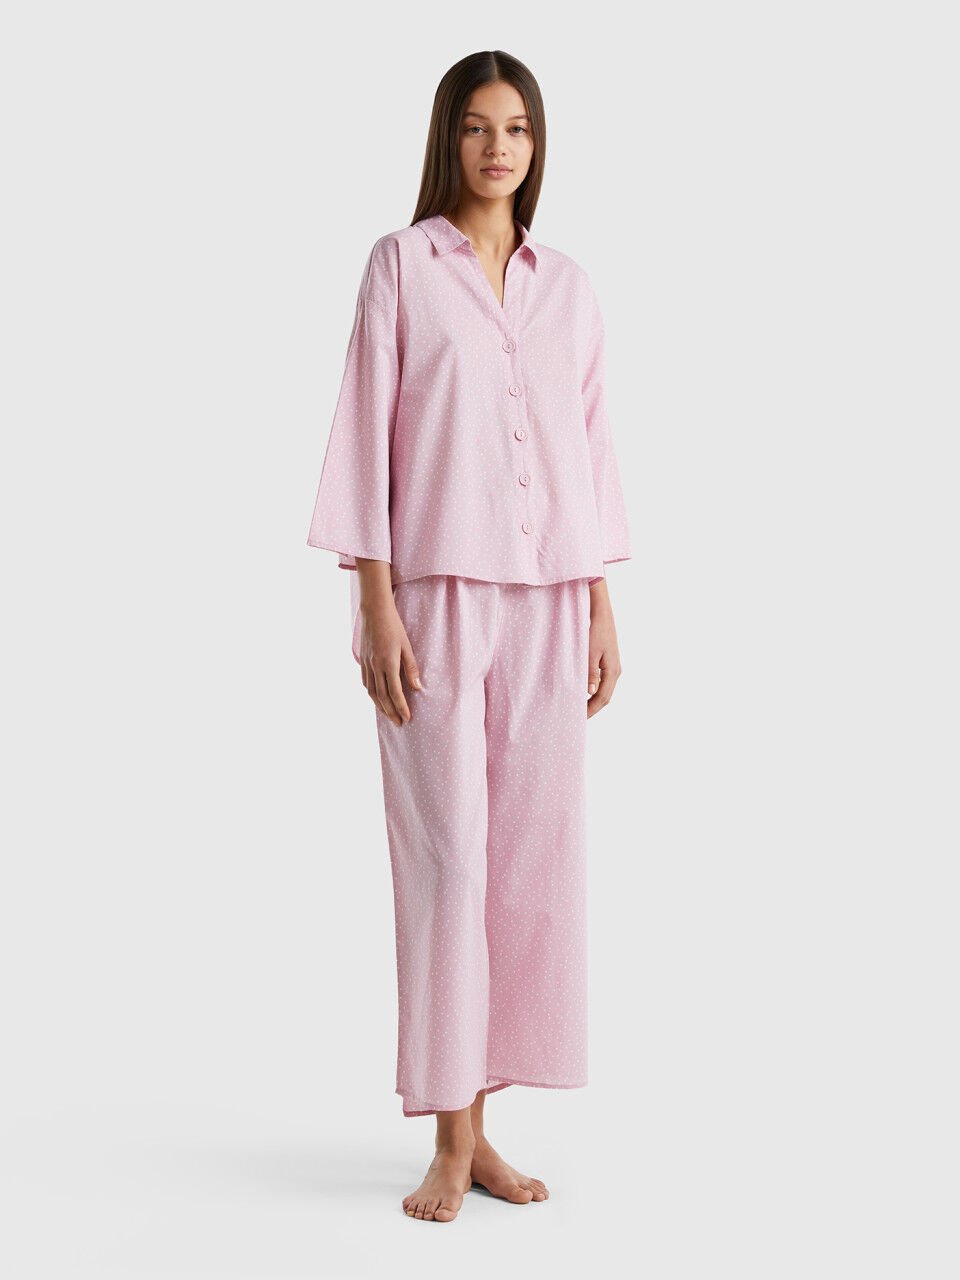 Polka dot pyjamas in cotton